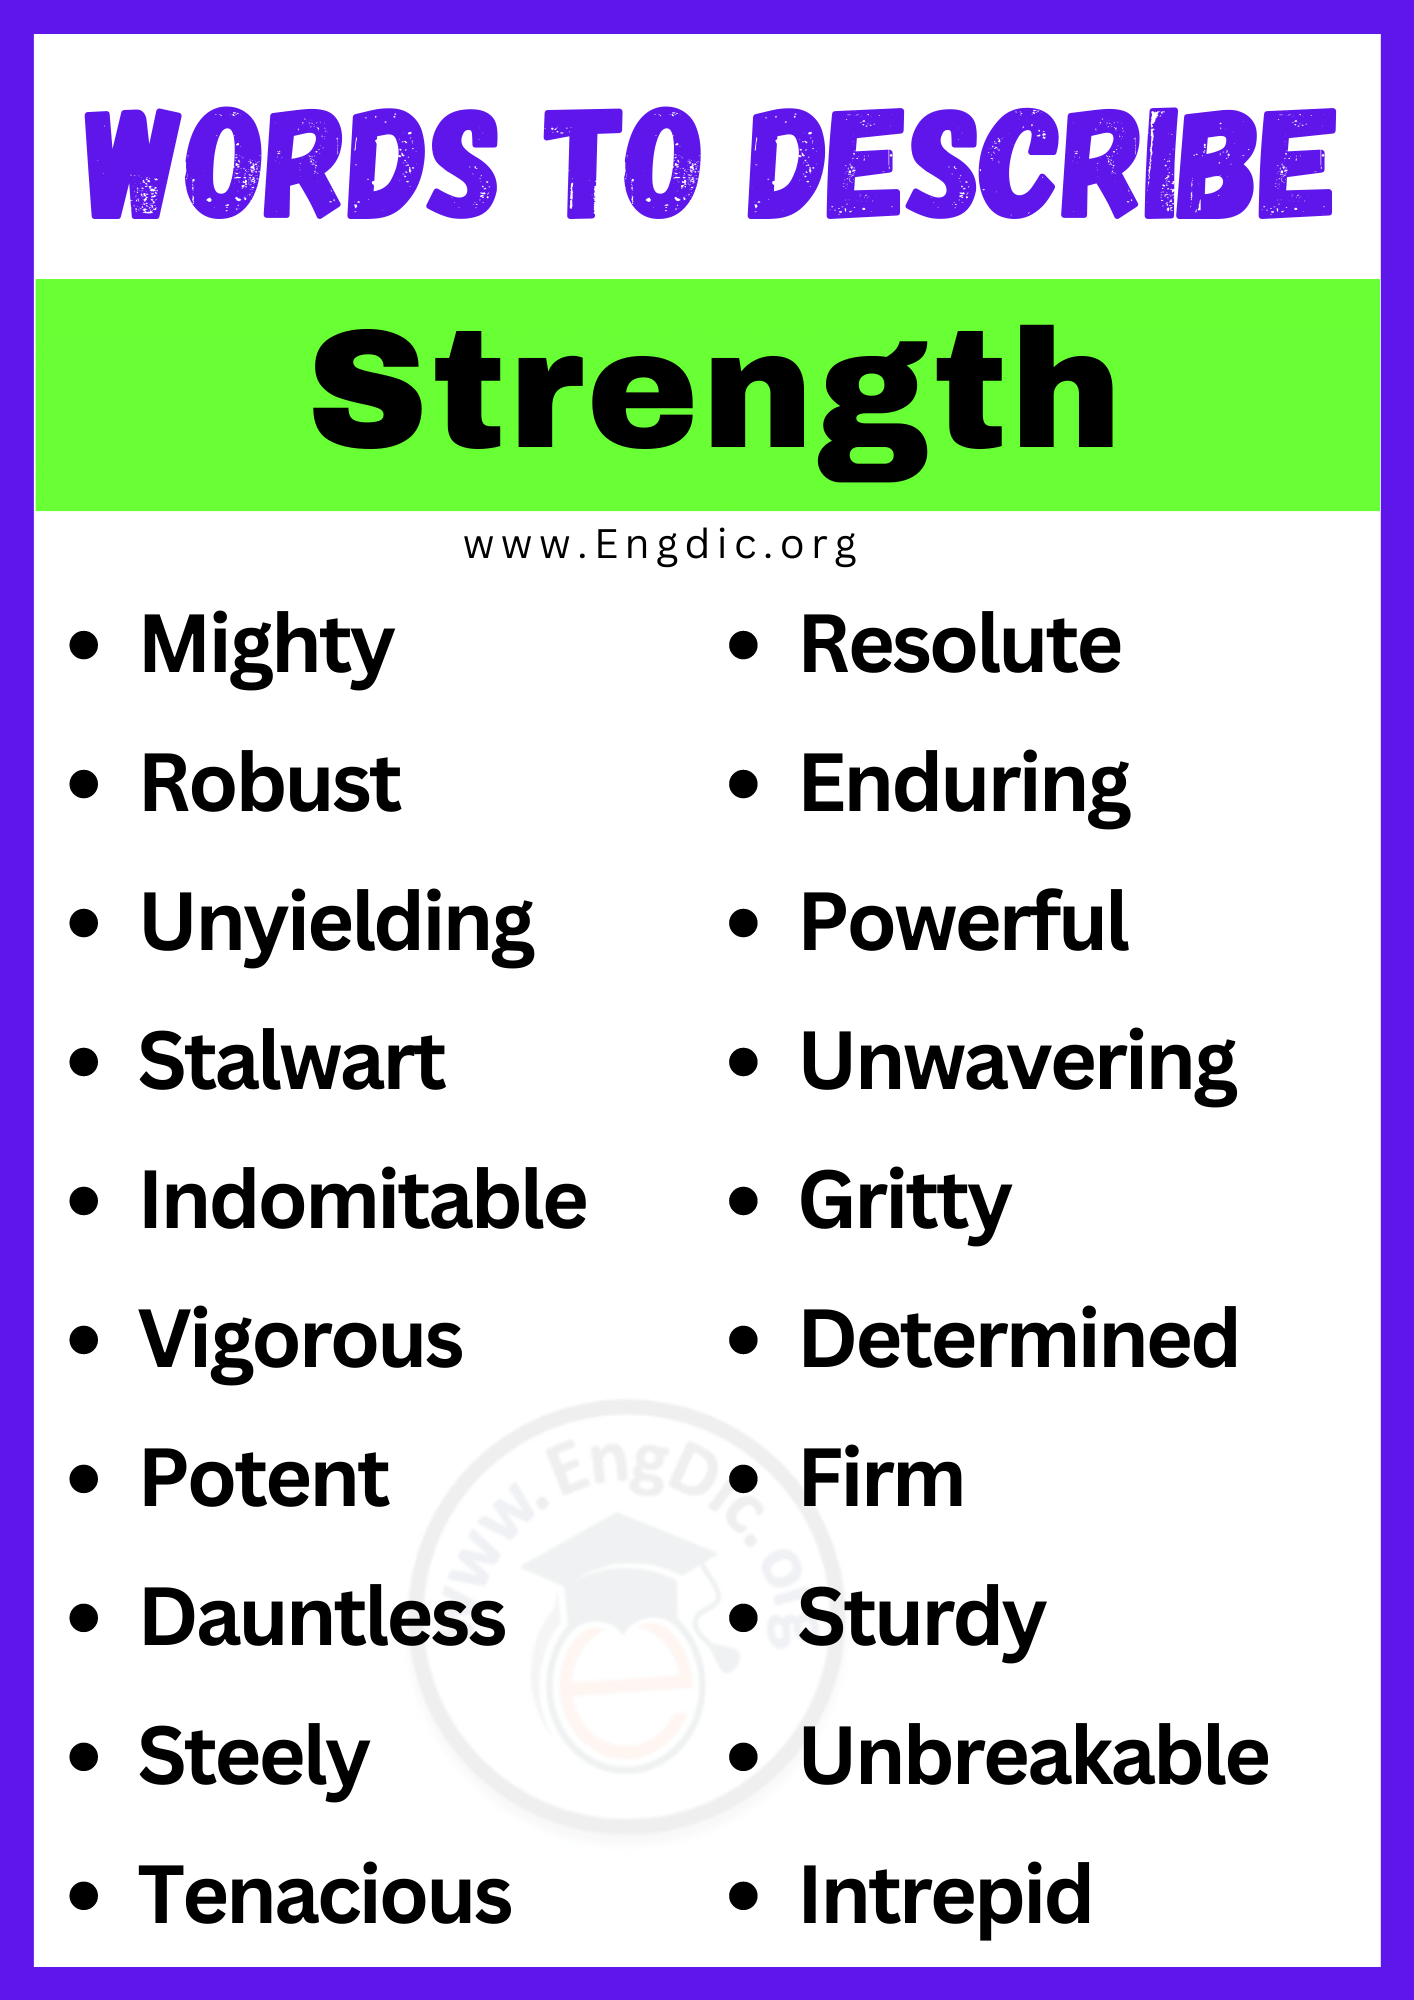 Words to Describe Strength